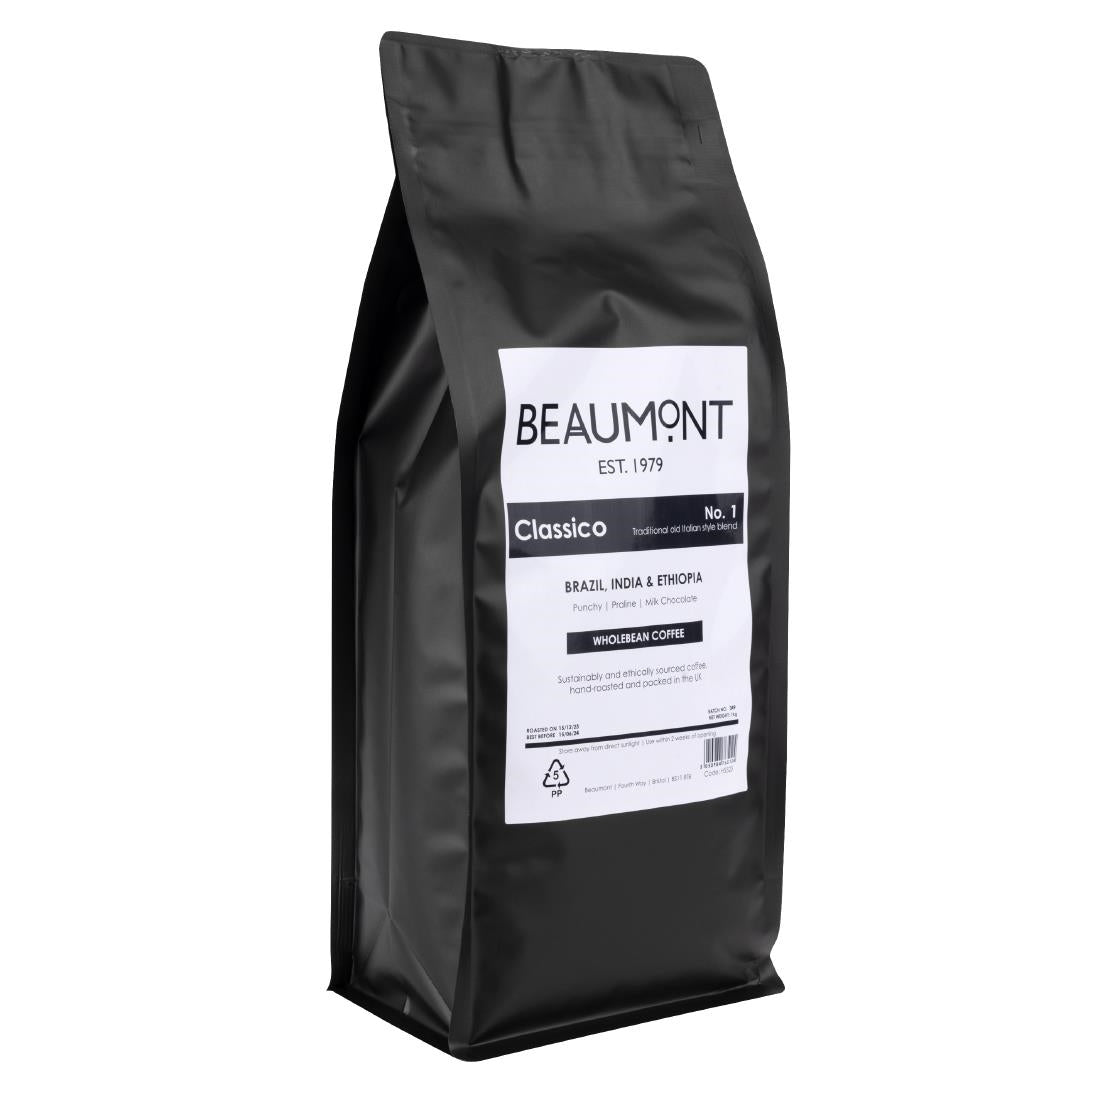 HS525 Beaumont No.1 Classico Coffee Beans 1kg